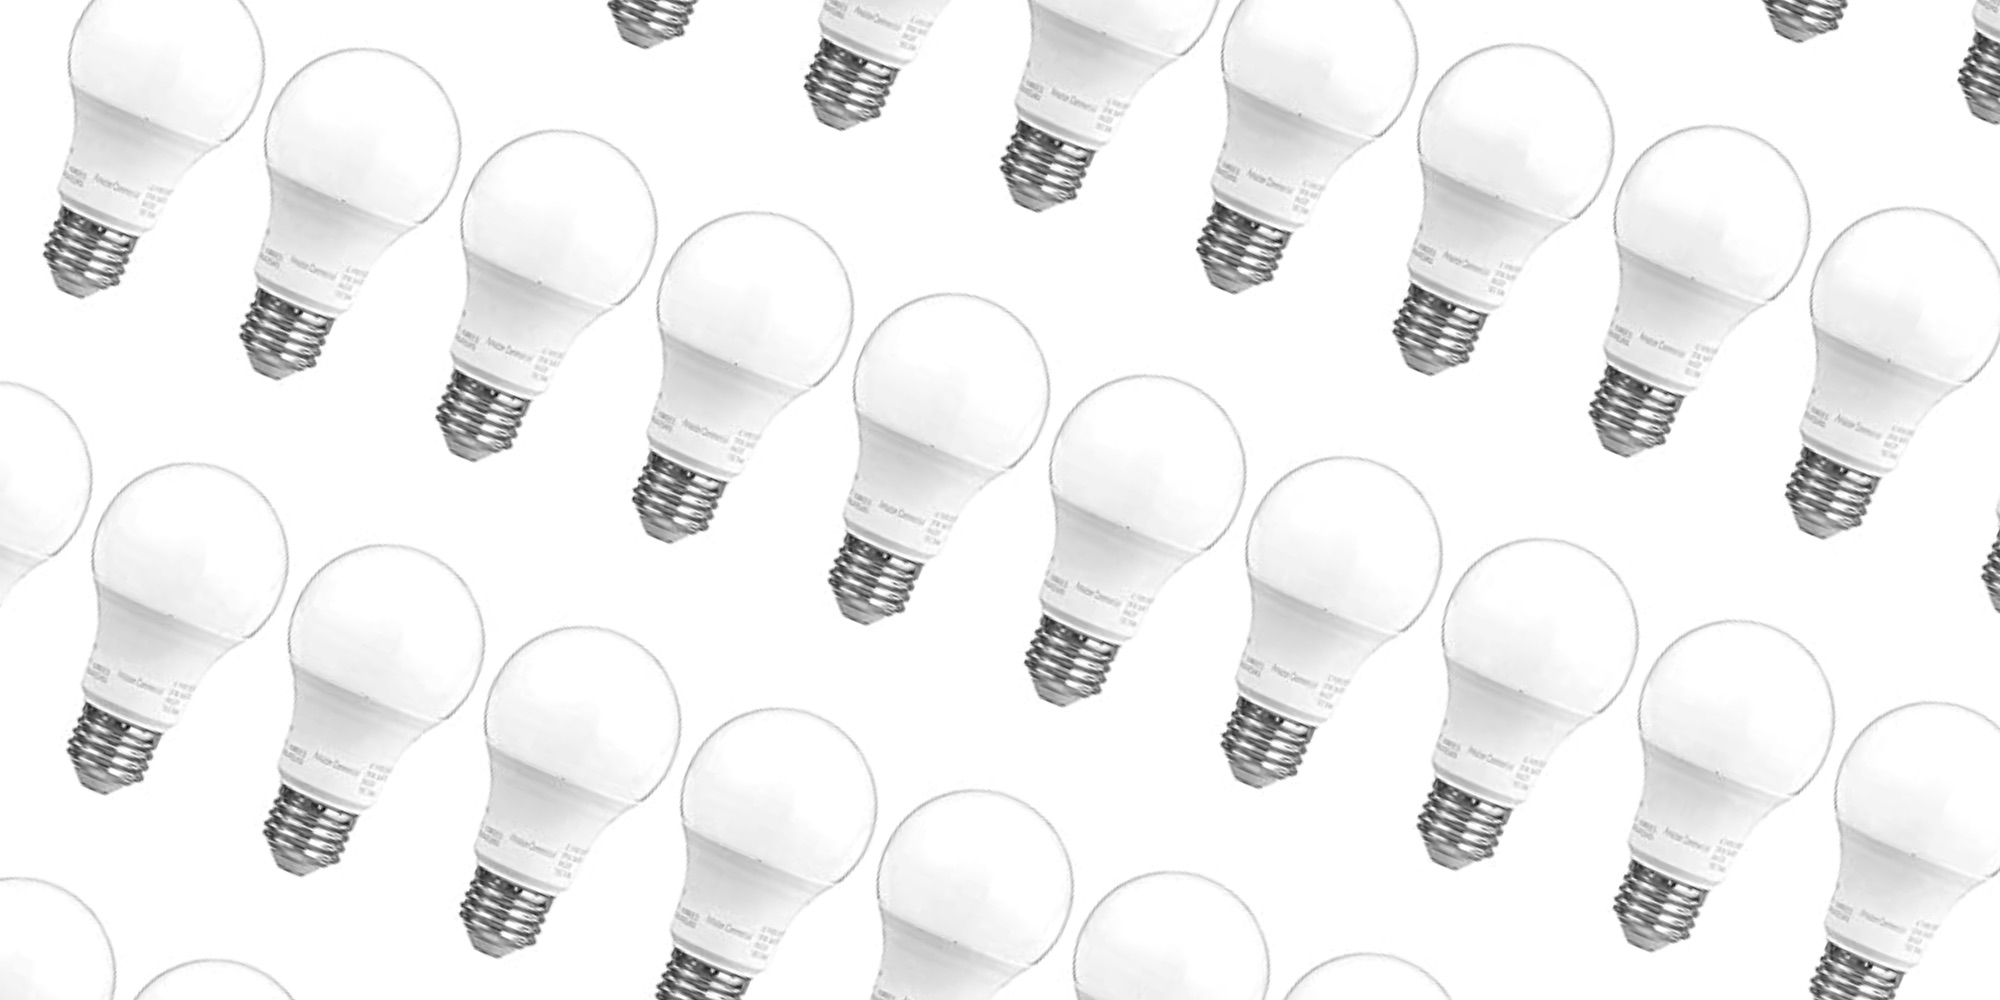 https://electrek.co/wp-content/uploads/sites/3/2021/07/amazon-commercial-led-light-bulbs.jpg?quality=82&strip=all